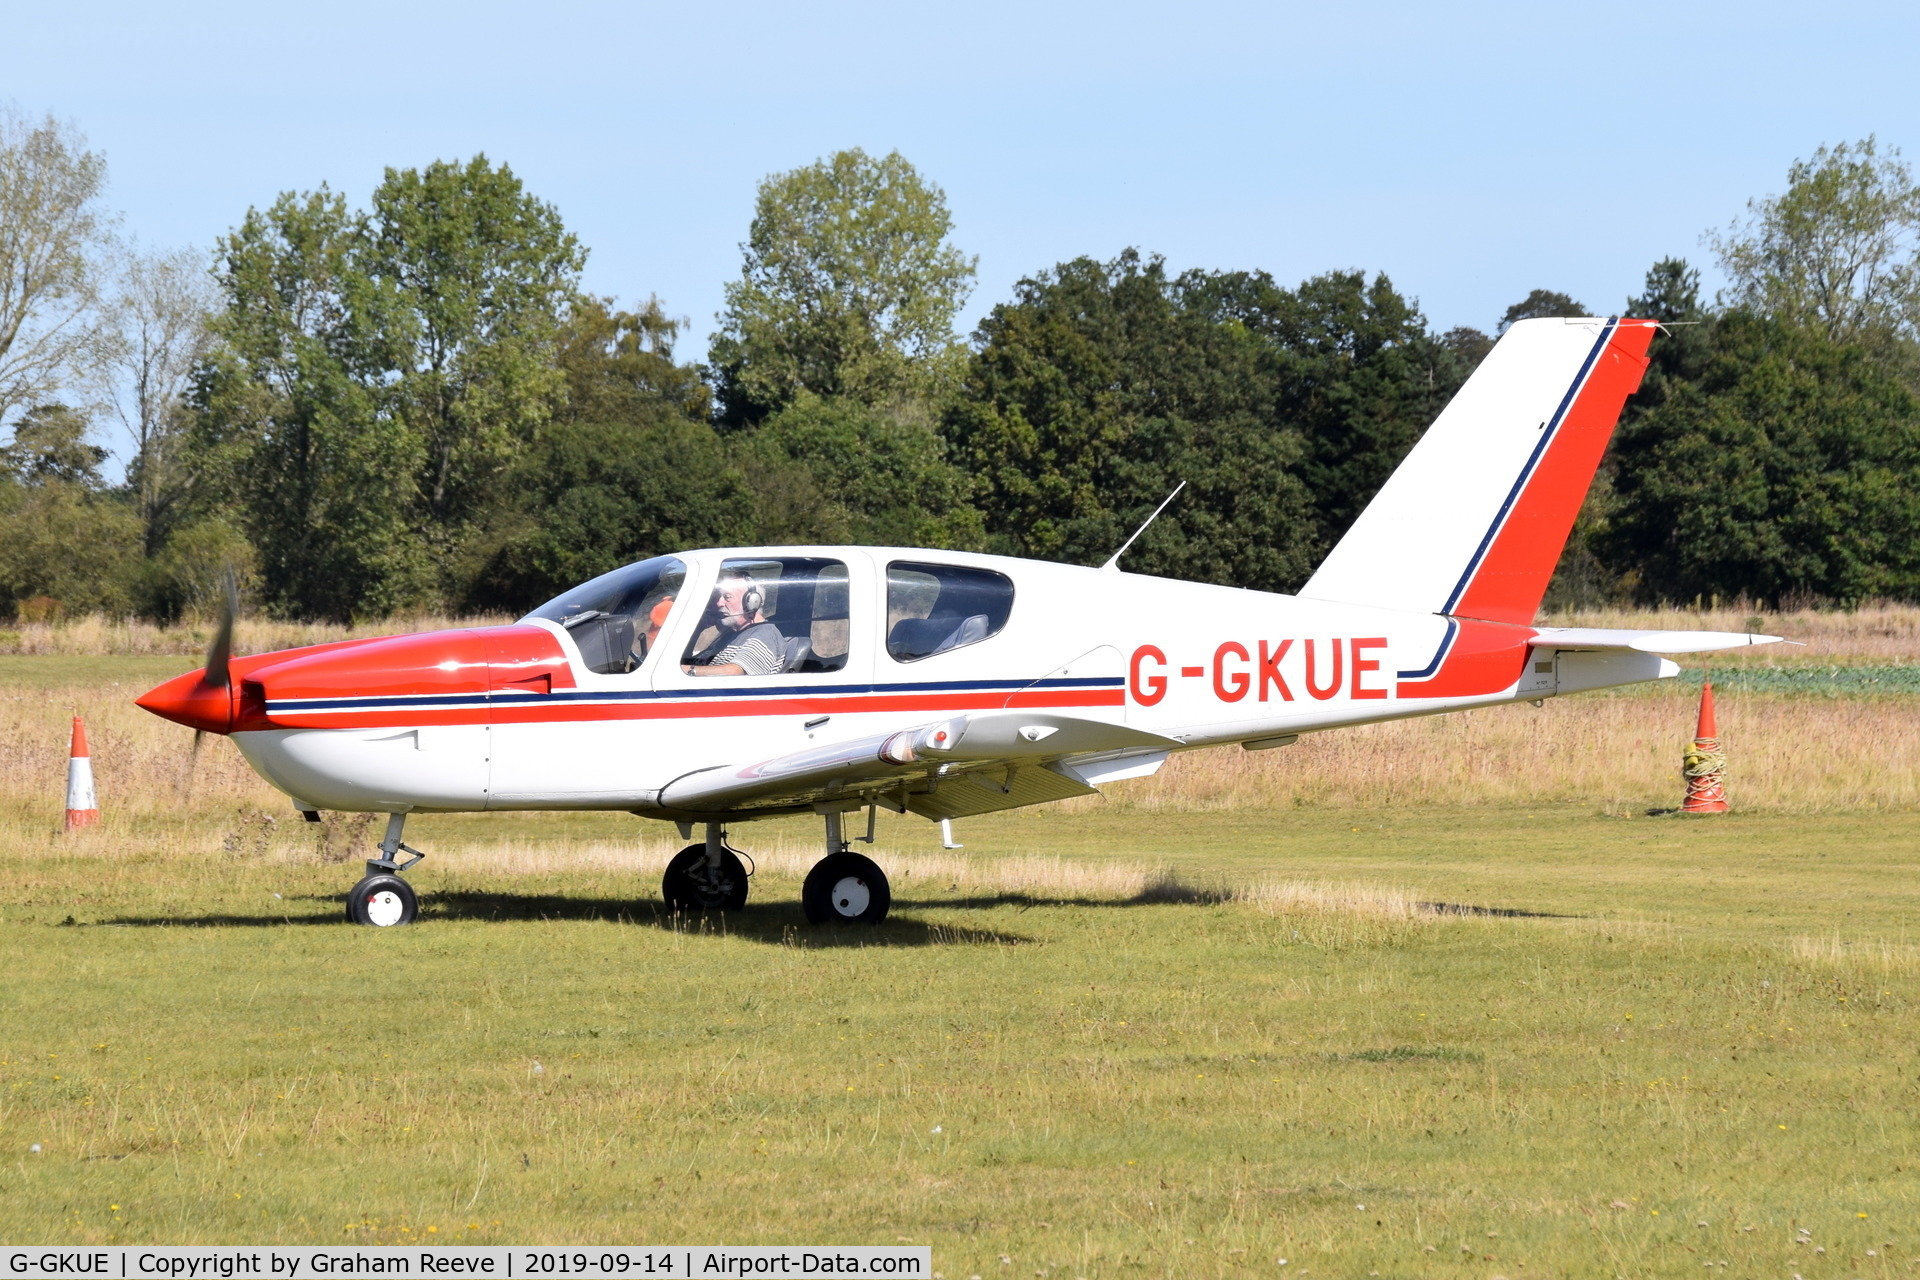 G-GKUE, 1990 Socata TB-9 Tampico C/N 1129, Just landed at, Bury St Edmunds, Rougham Airfield, UK.